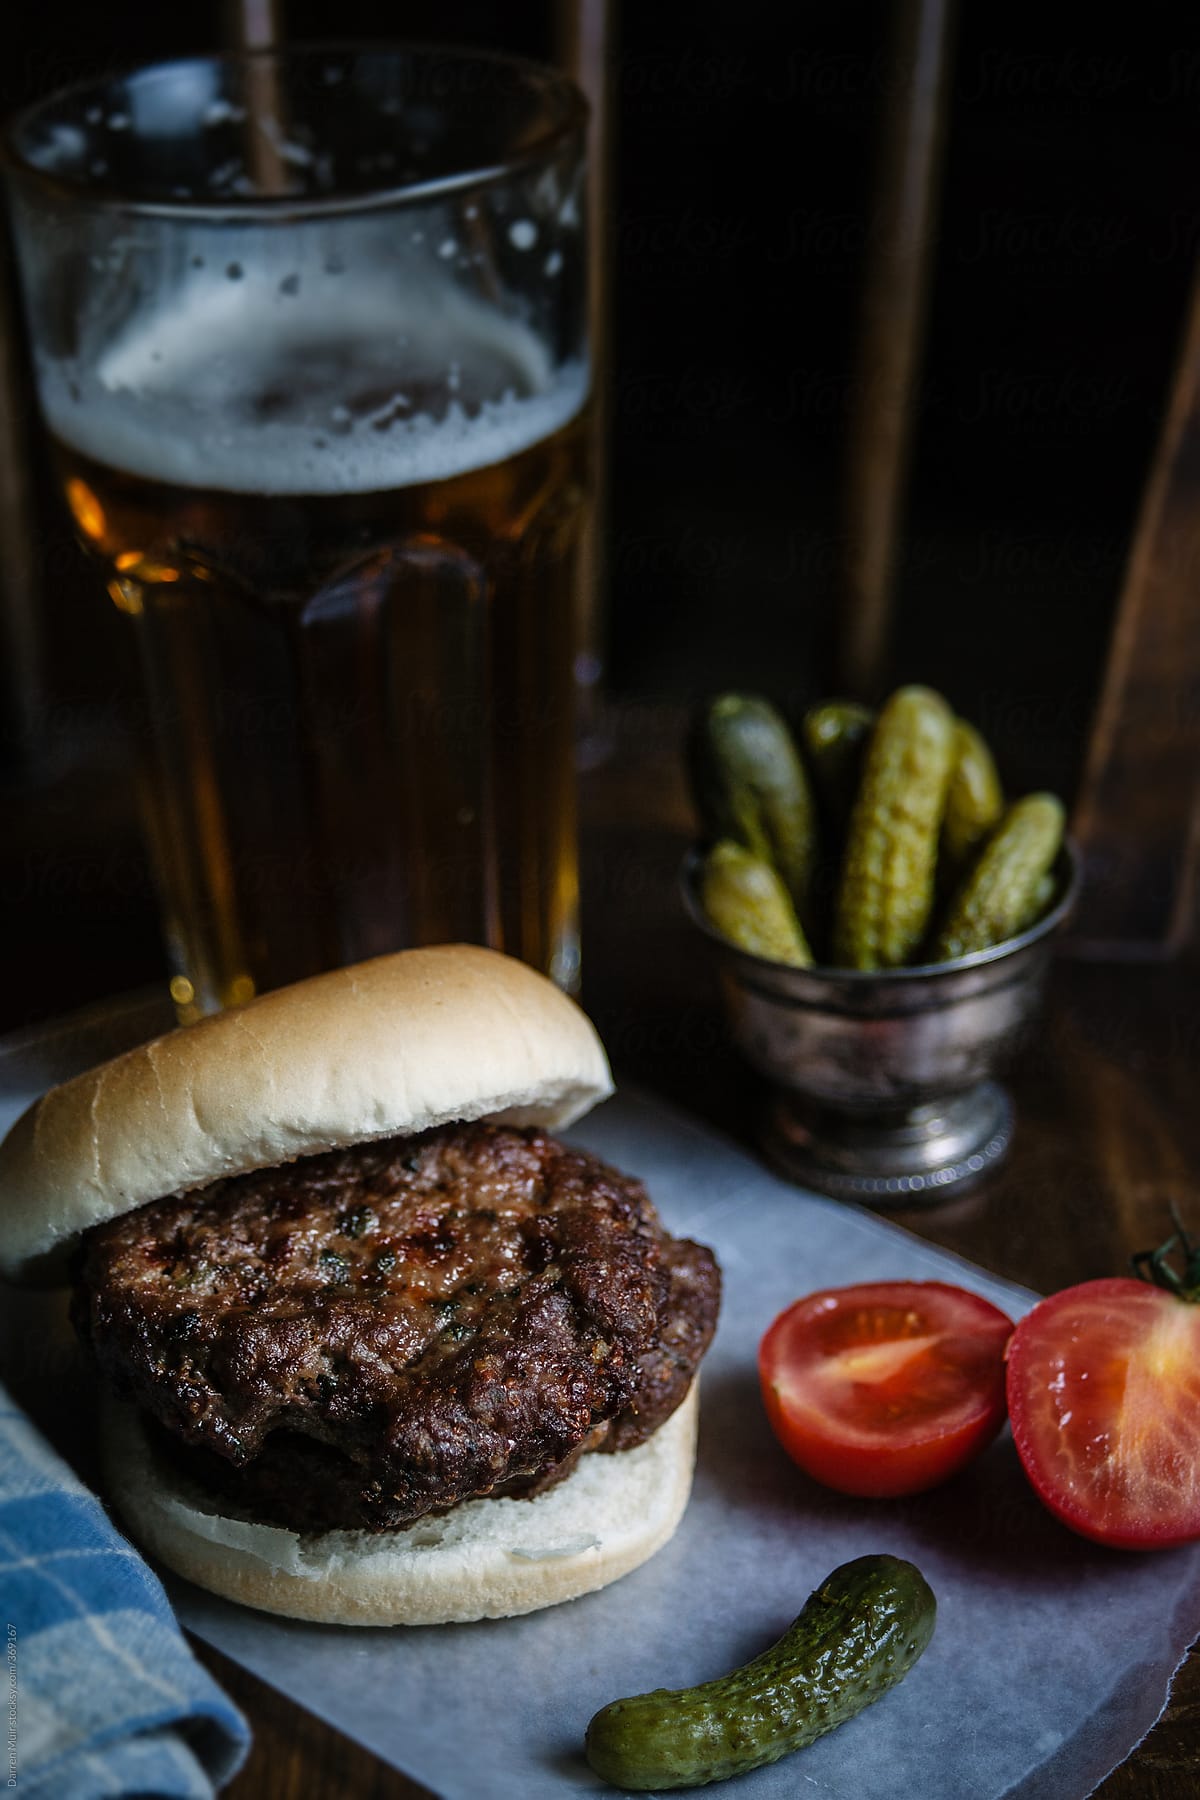 Brisket burger and a beer.